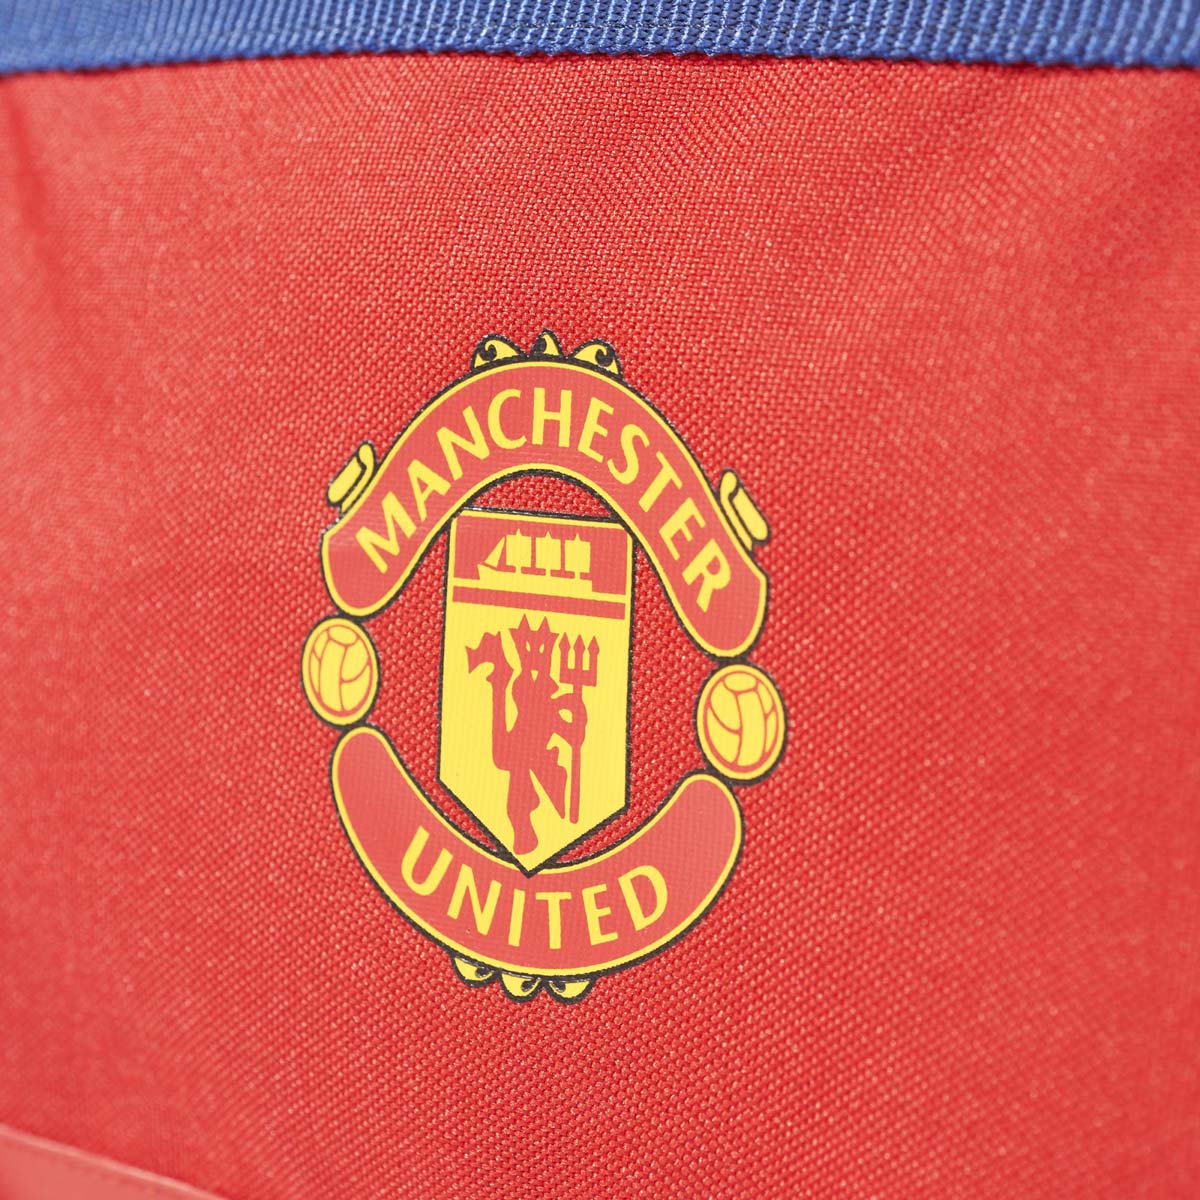 Manchester United FC Team Bag Medium